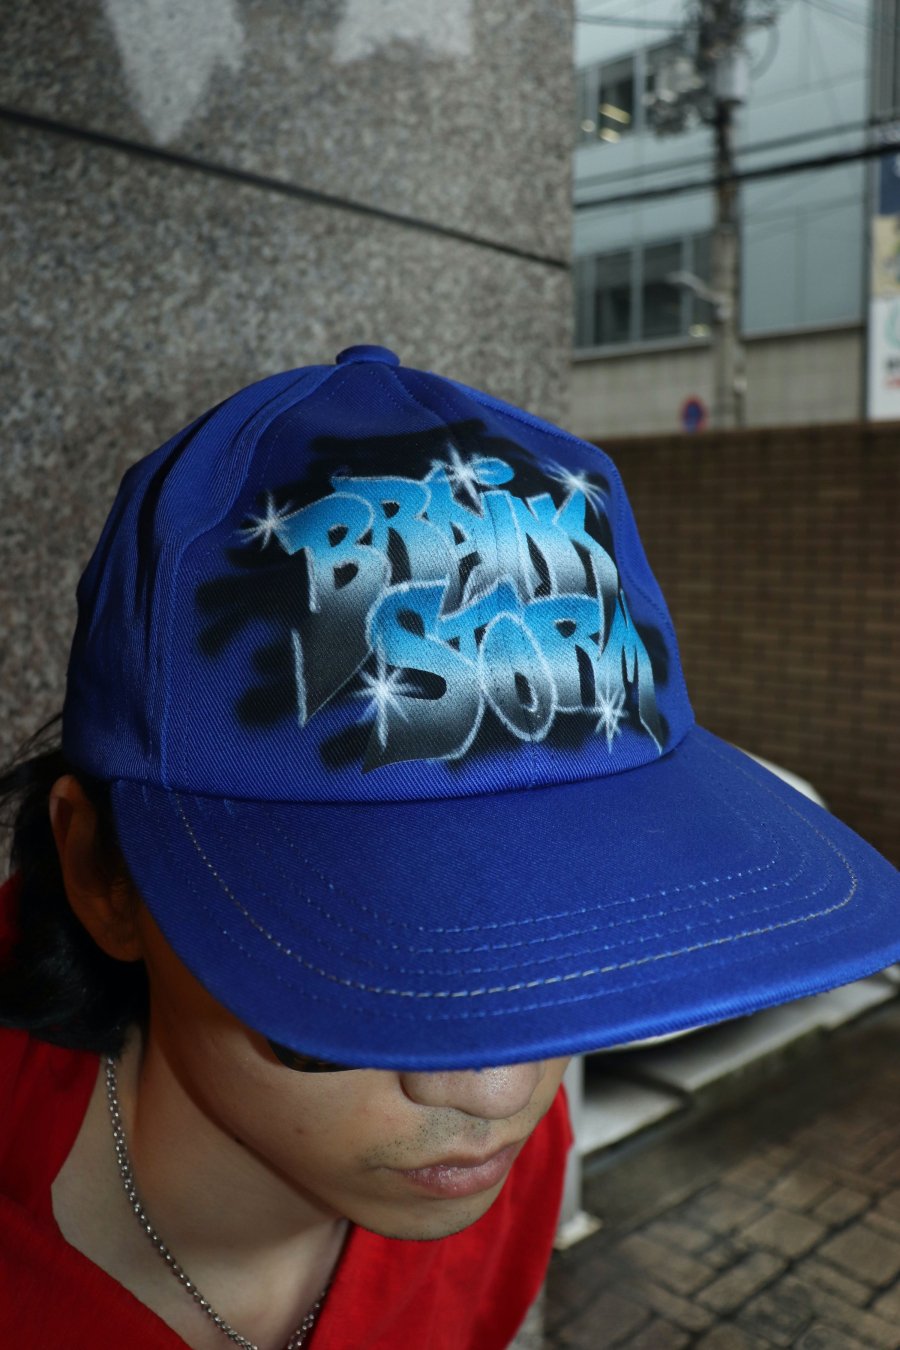 MASU（エムエーエスユー）のBRAINSTORM GRAFFITI CAP BLUEの通販サイト ...